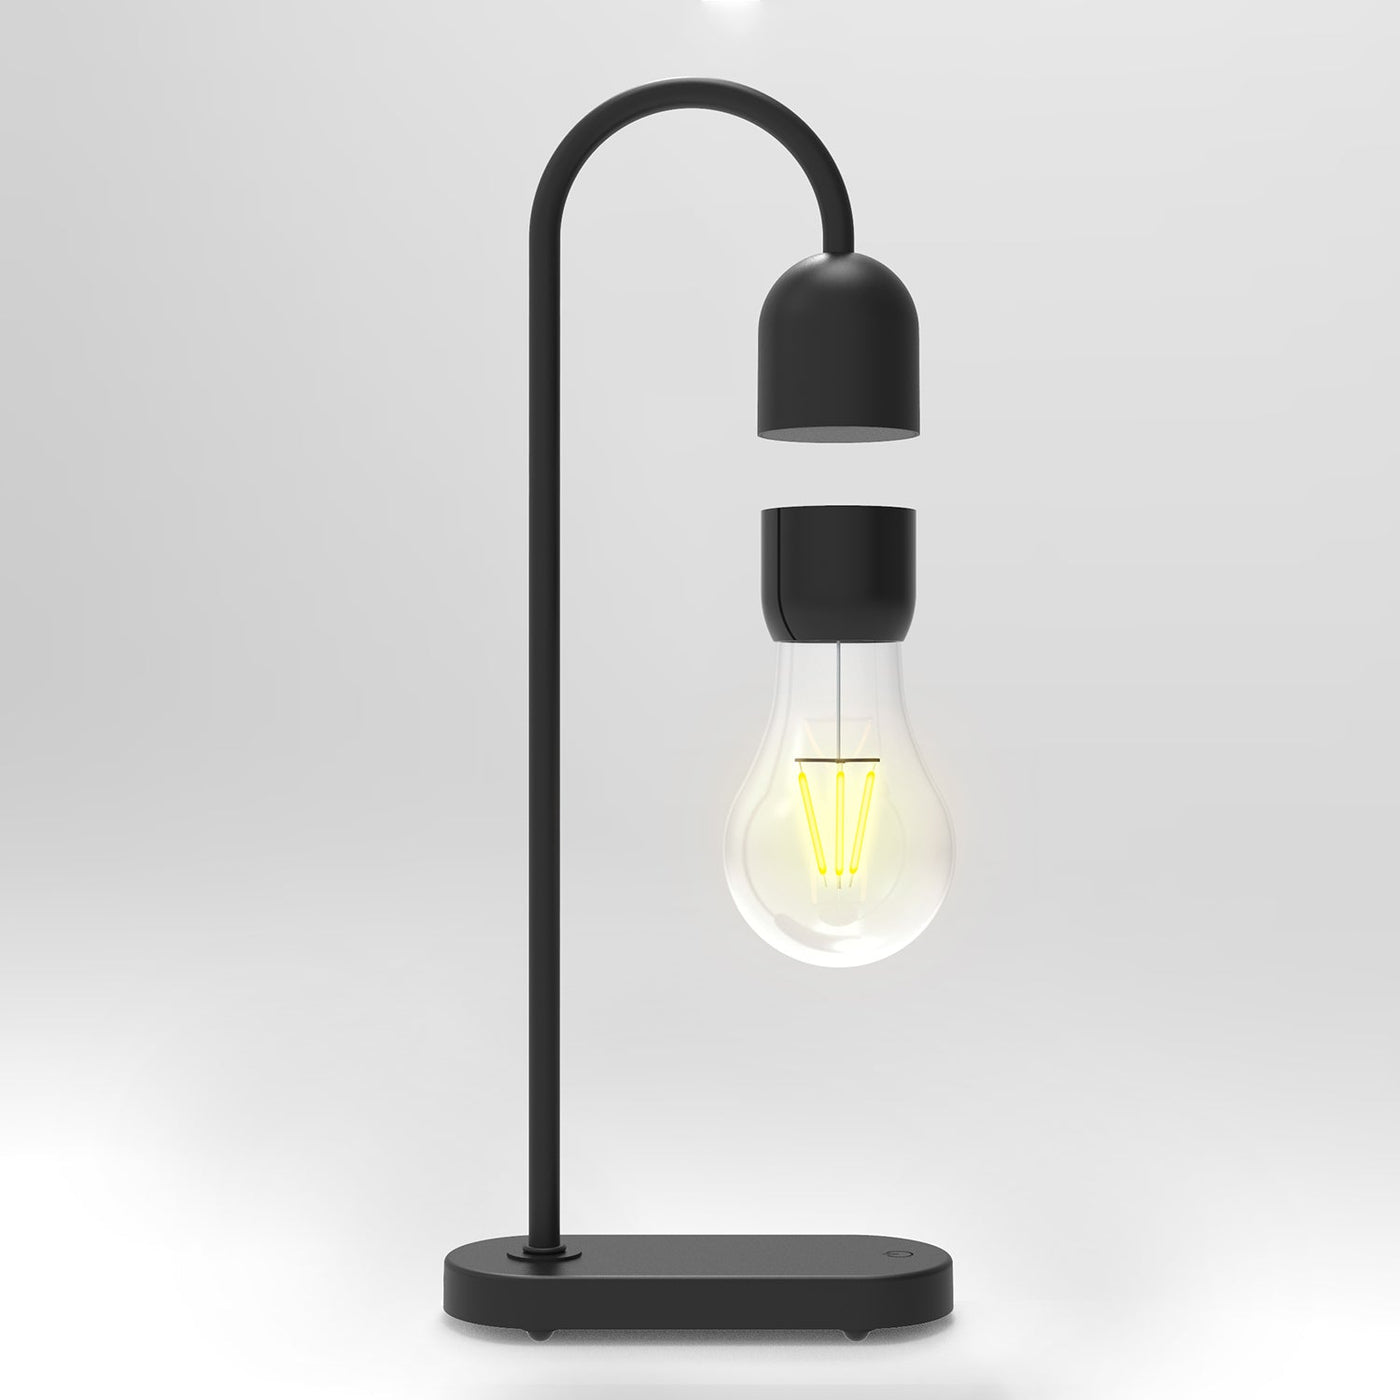 LANGTU Magnetic Levitation Wireless Charger Smart Lamp